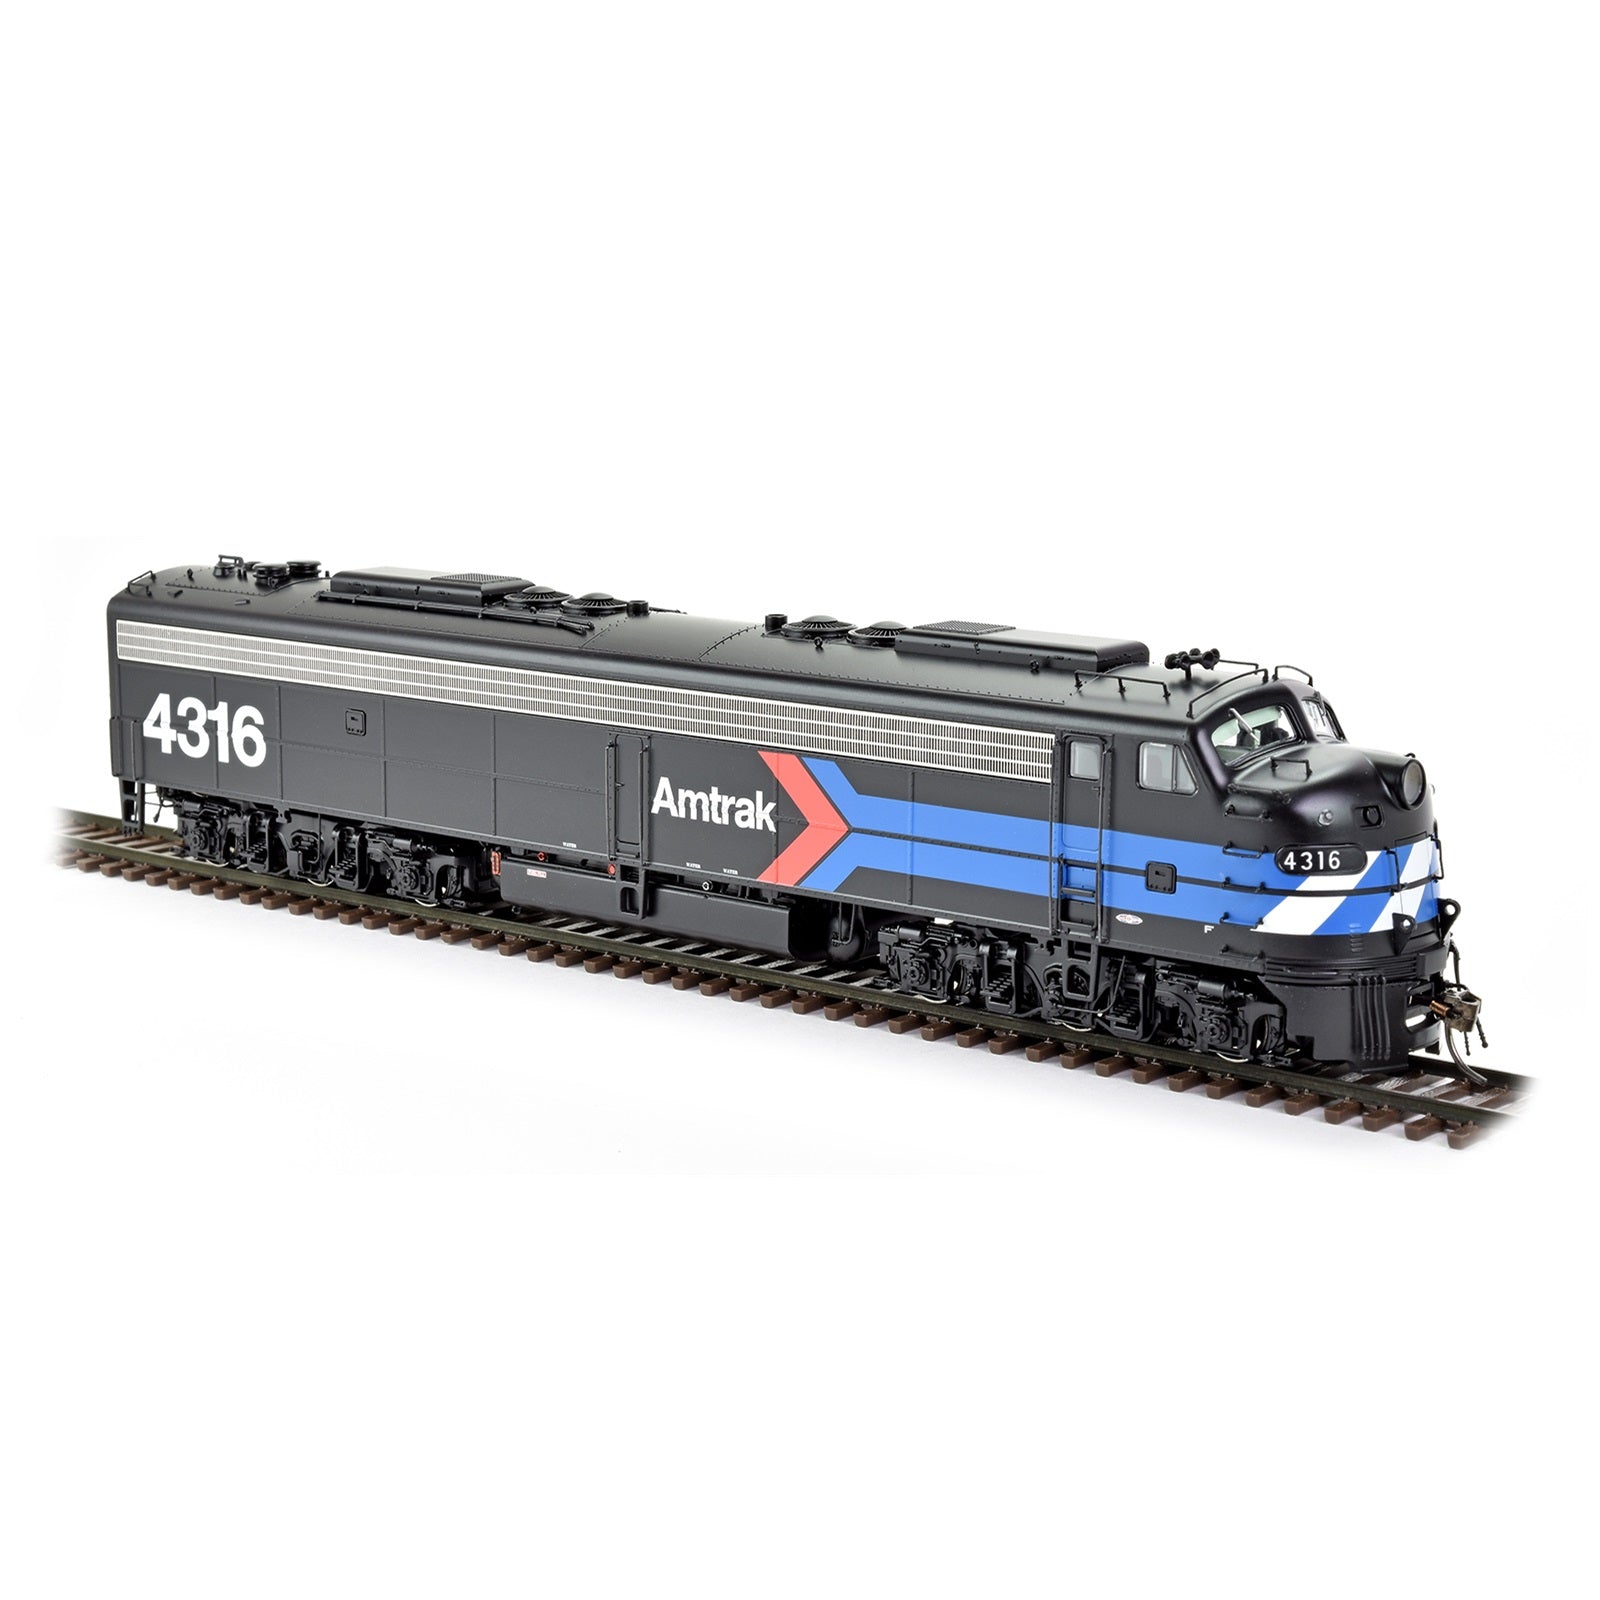 Rapido EMD8A Locomotive - Amtrak #4316 (Early Black Scheme), HO Scale - Micro - Mark Locomotives